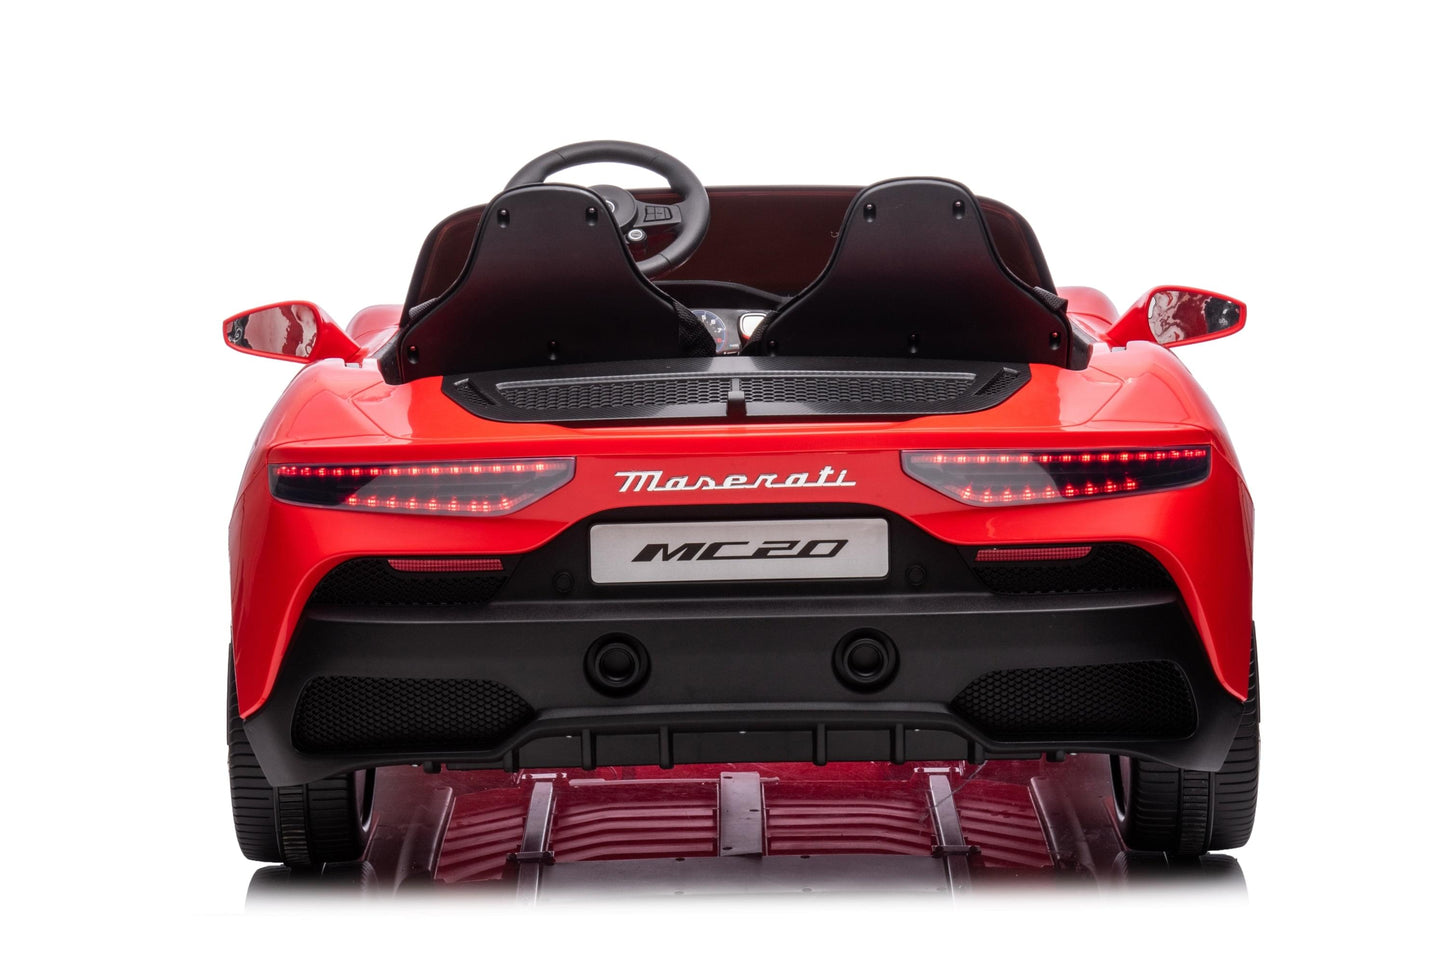 Freddo Toys Maserati MC20